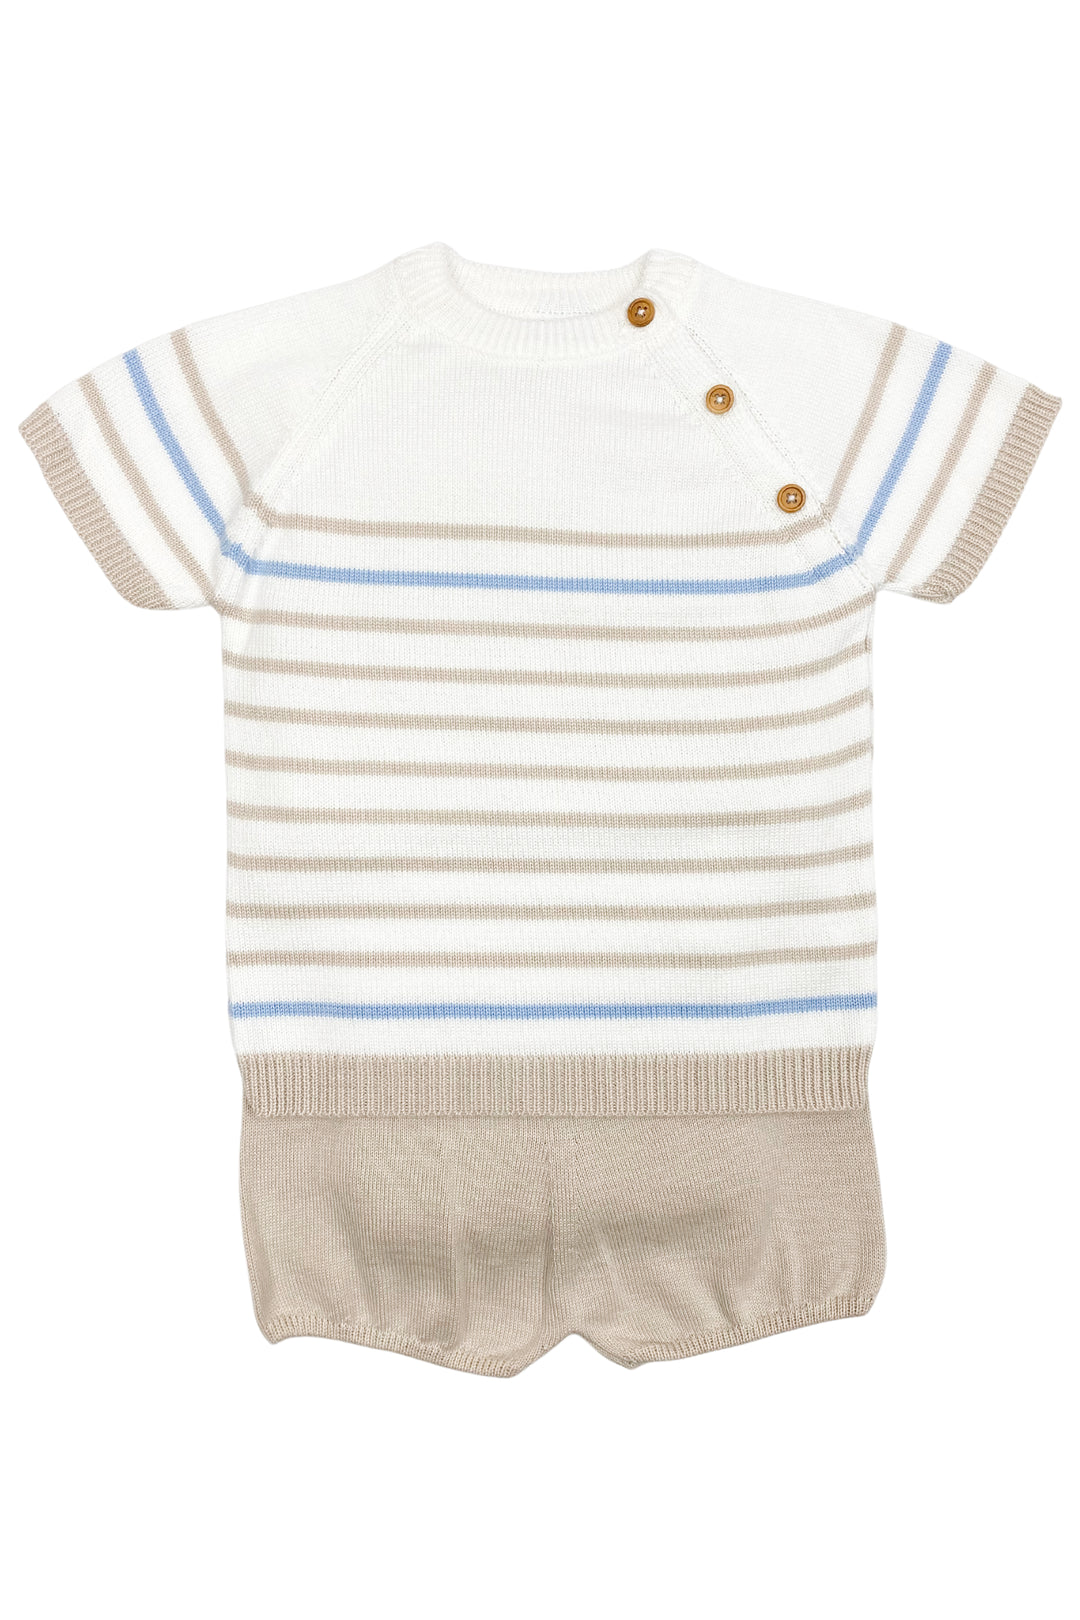 Granlei "Casper" Stone & Blue Striped Knit Top & Shorts | Millie and John